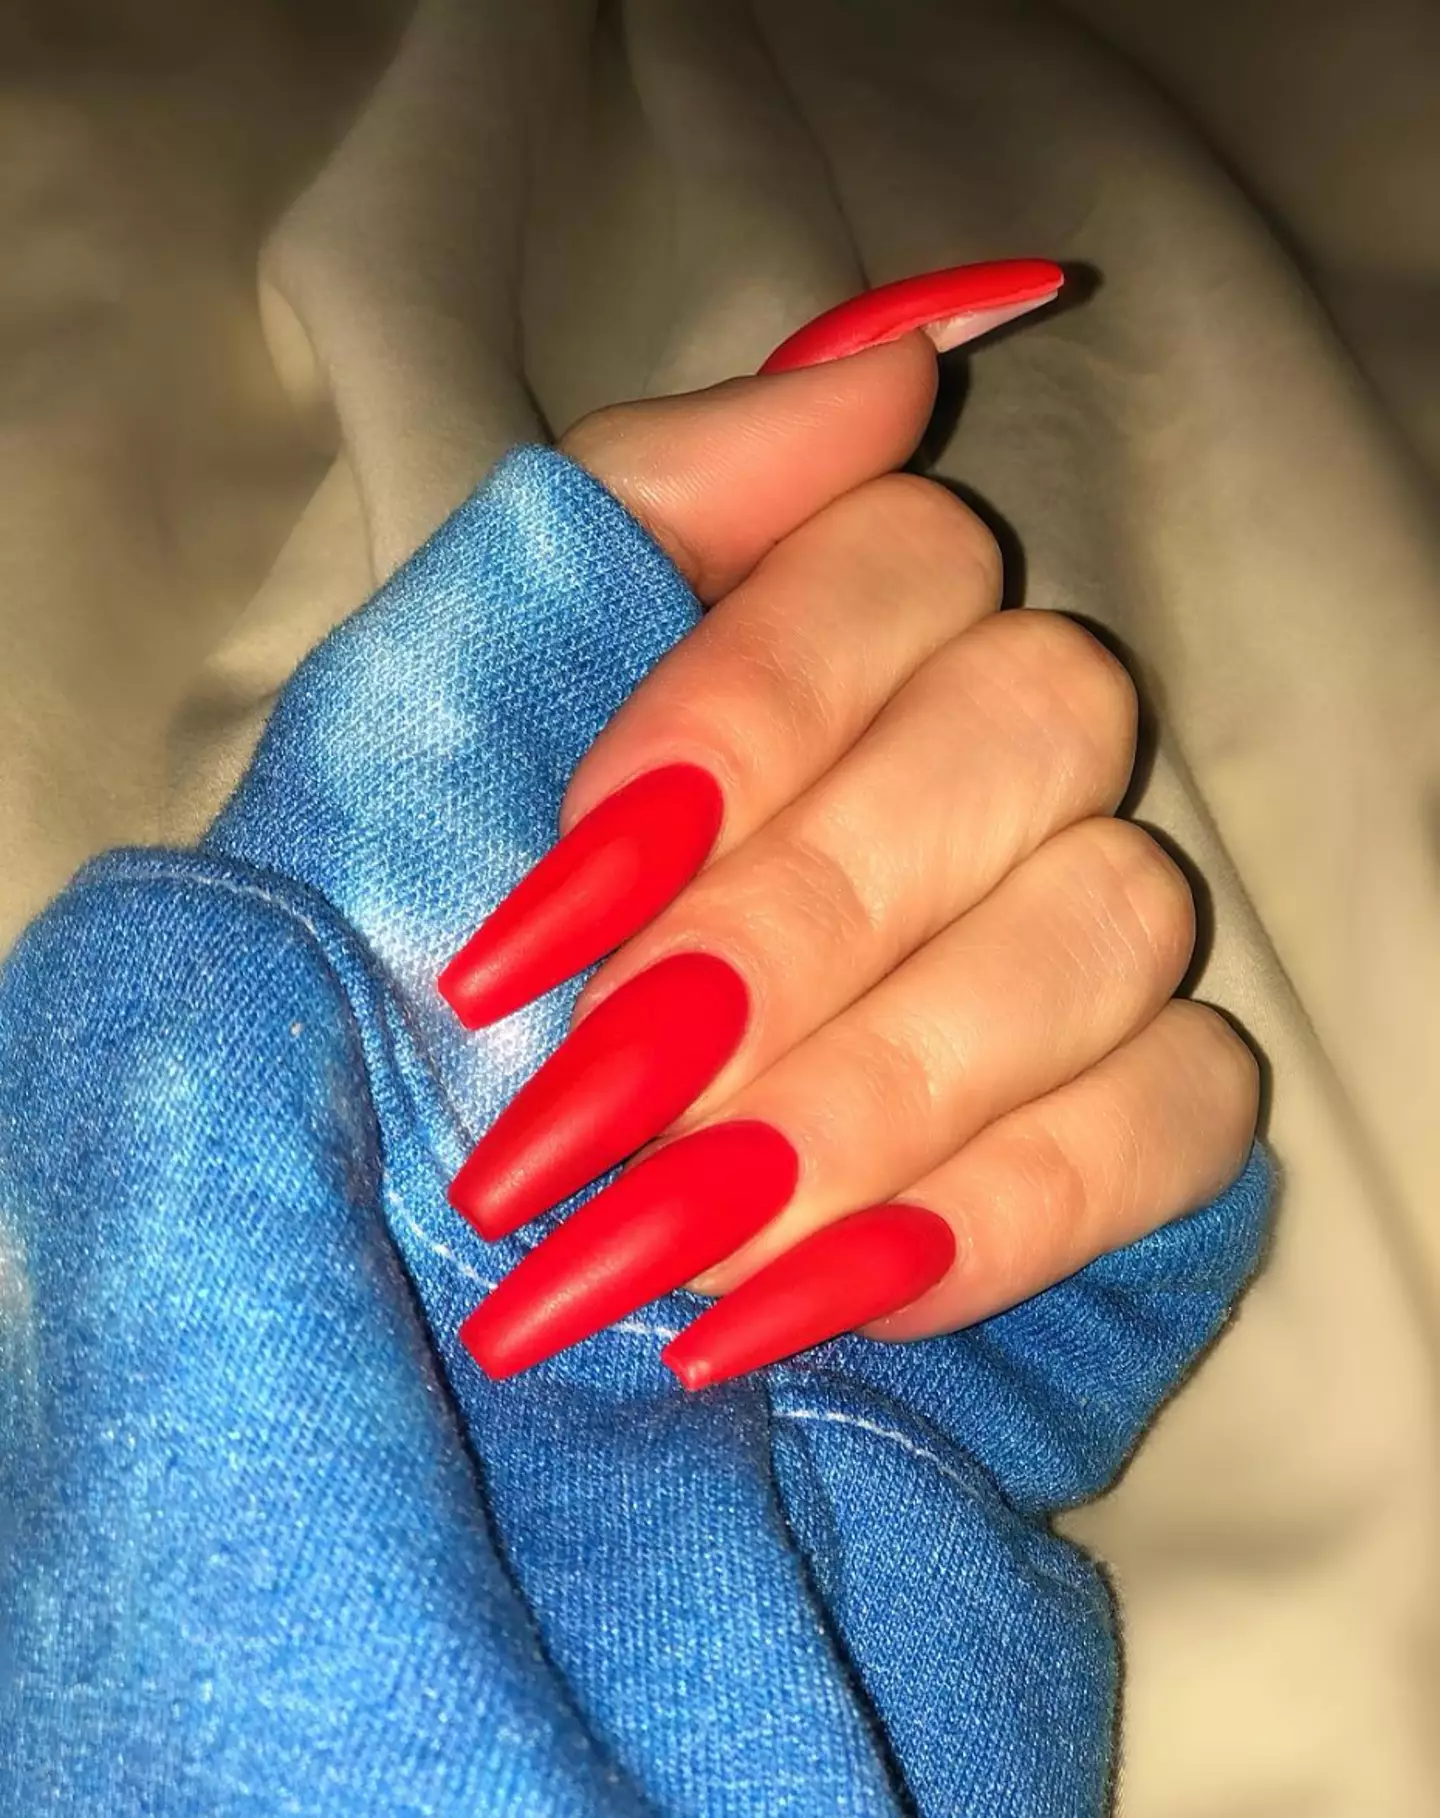 Khloé Kardashian has defended her long manicure.